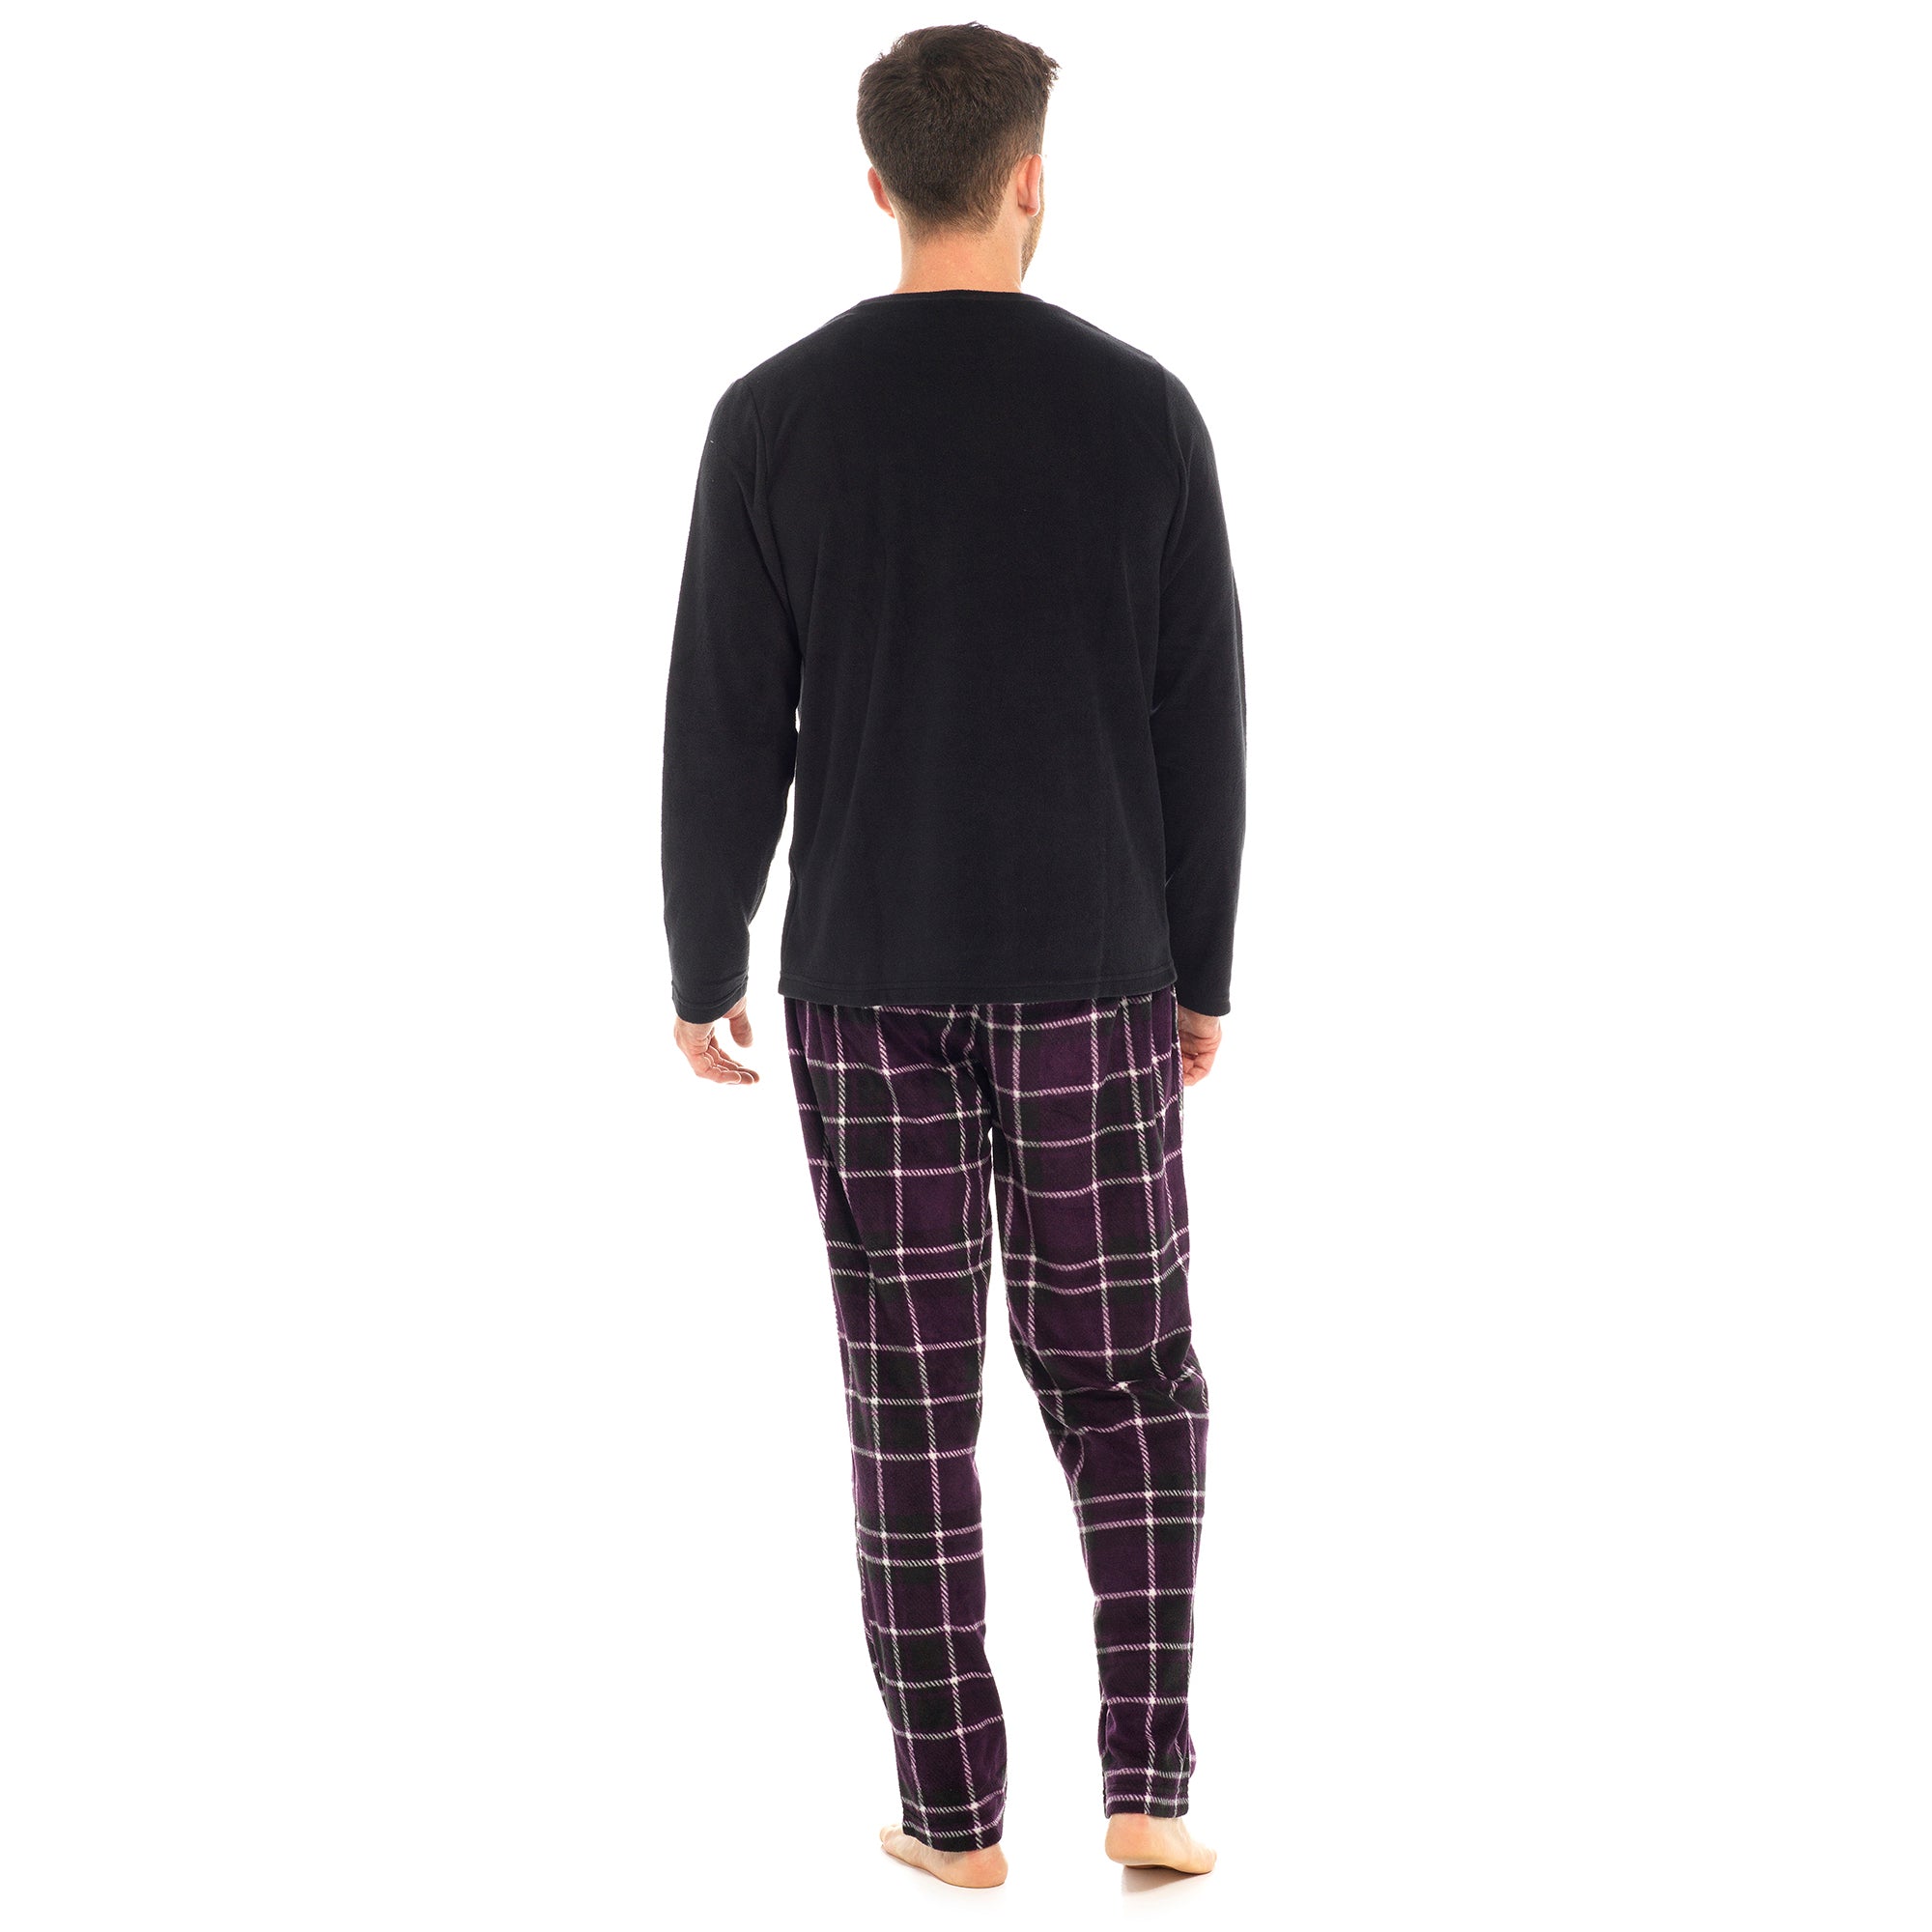 Black Fleece Pyjamas